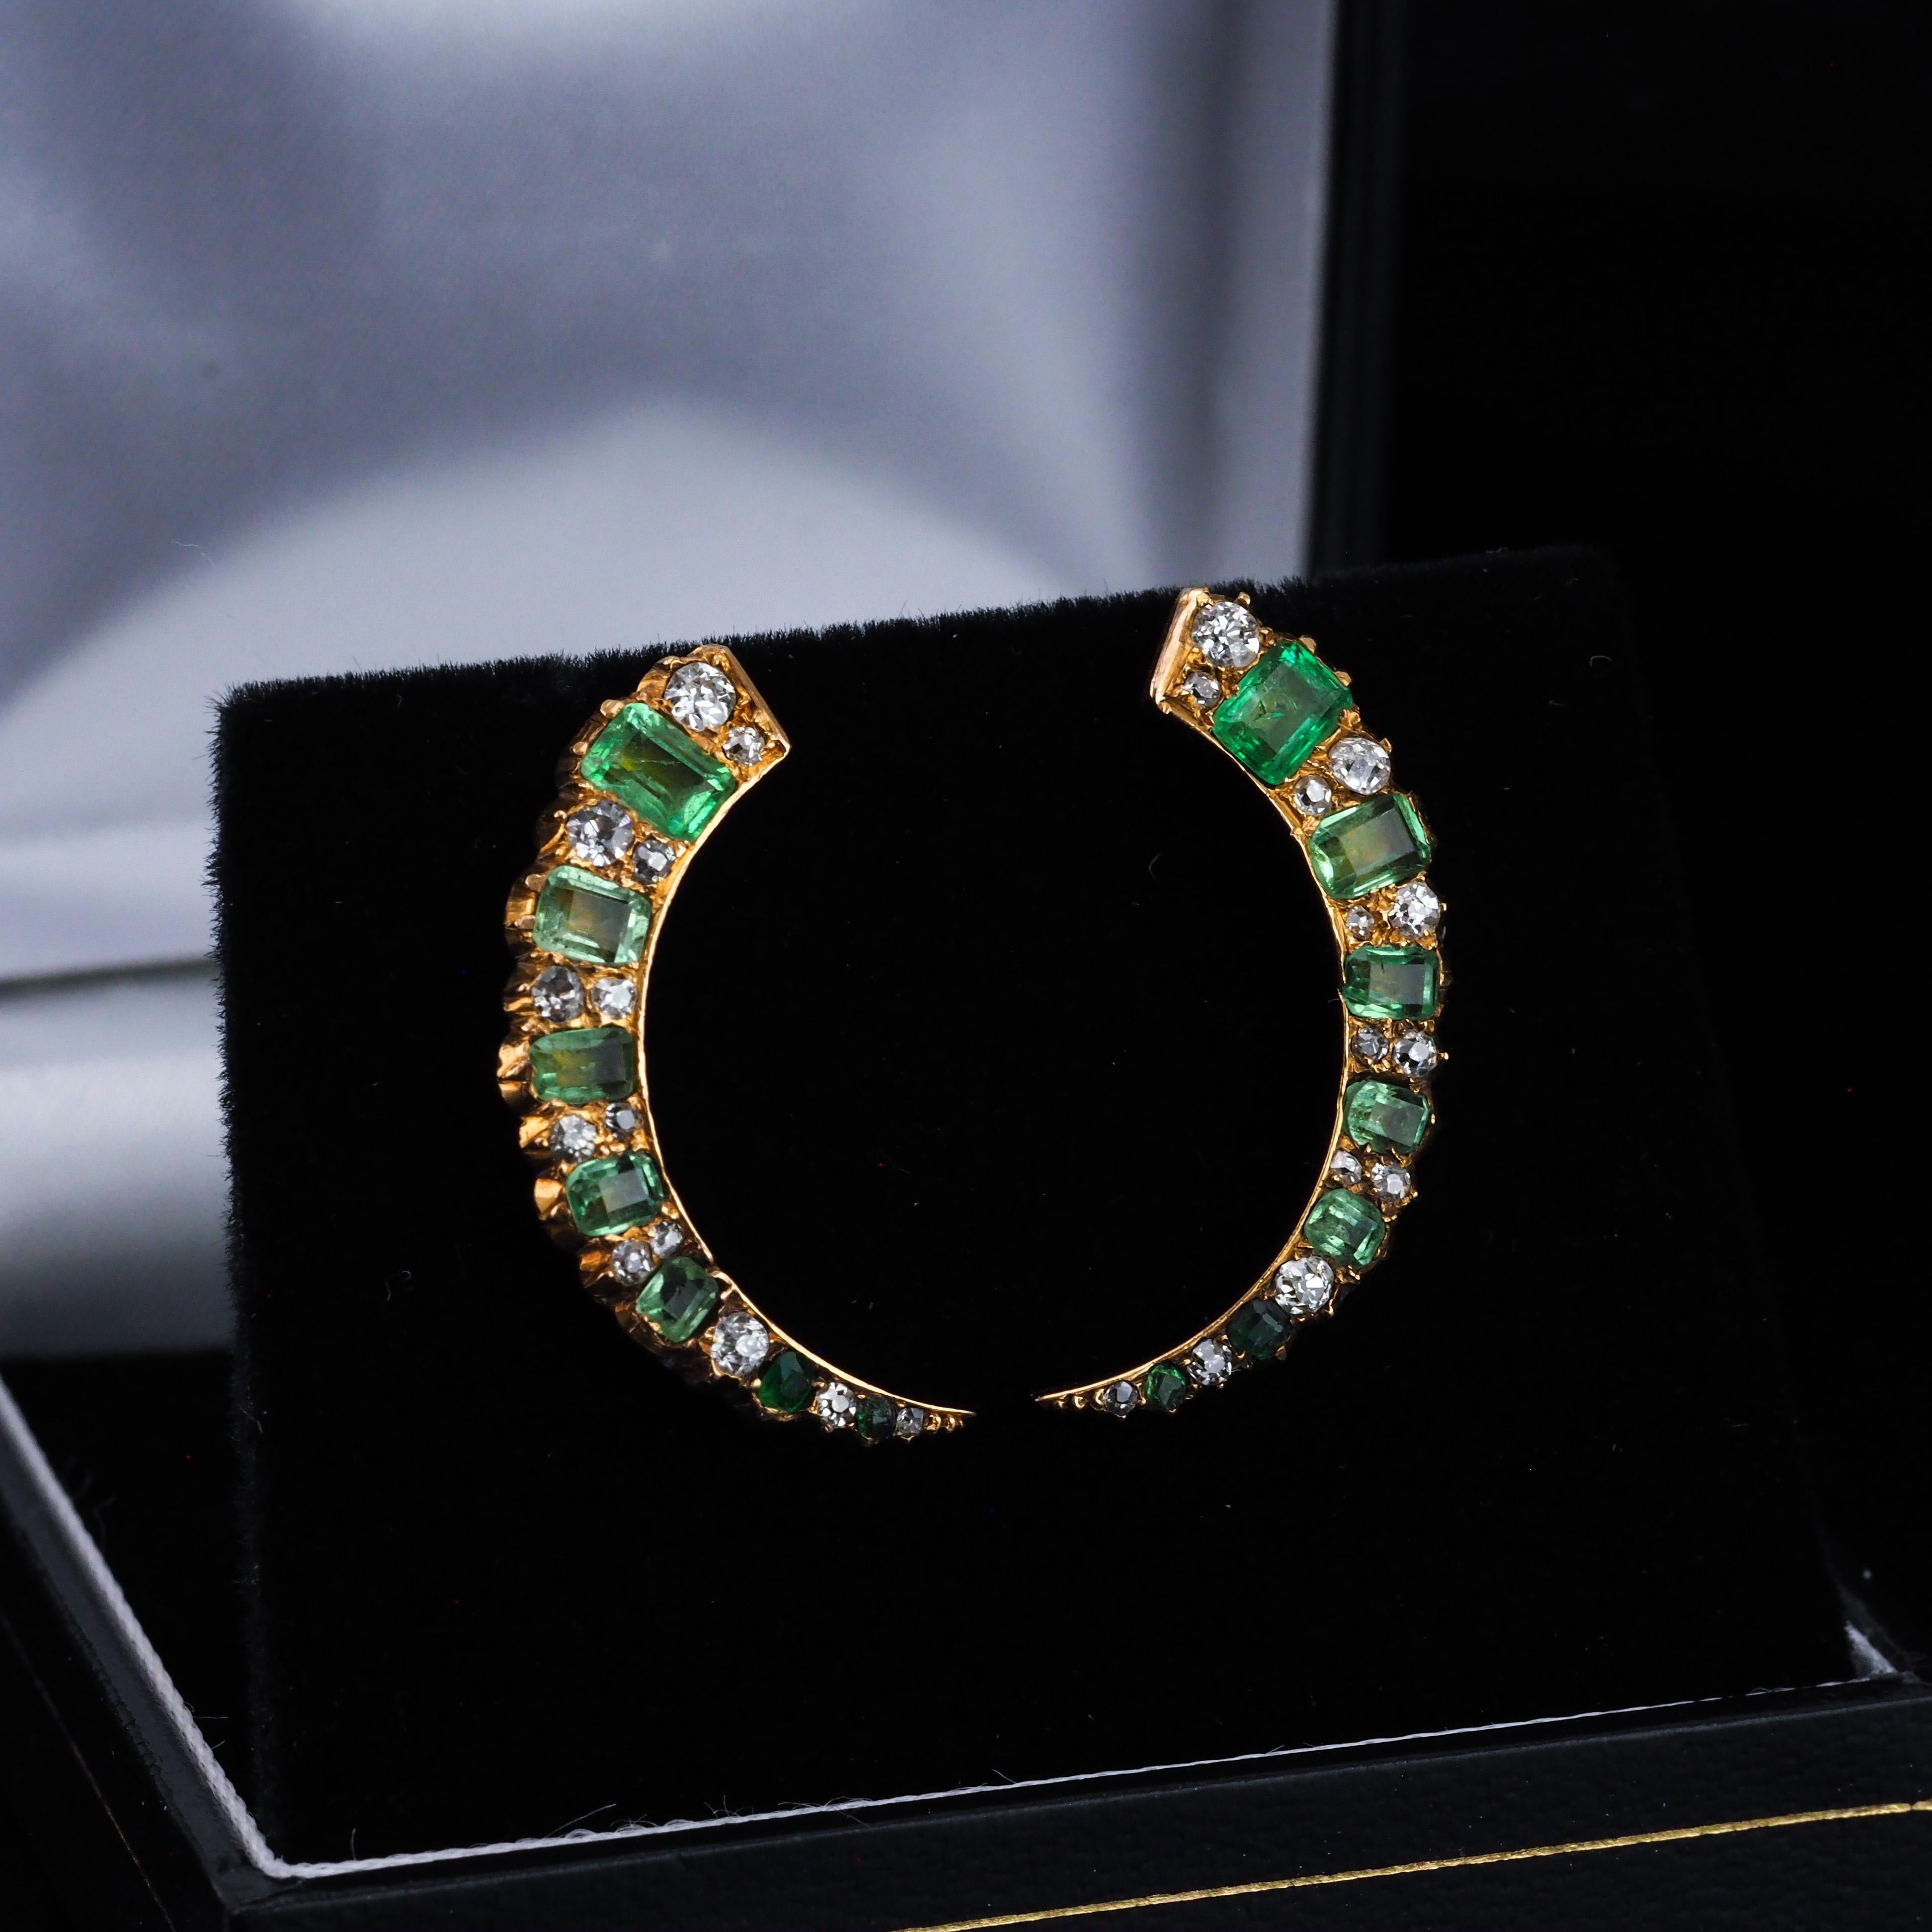 Antique Victorian Emerald & Diamond Earrings 18K Gold Crescent Design - c.1890 For Sale 5